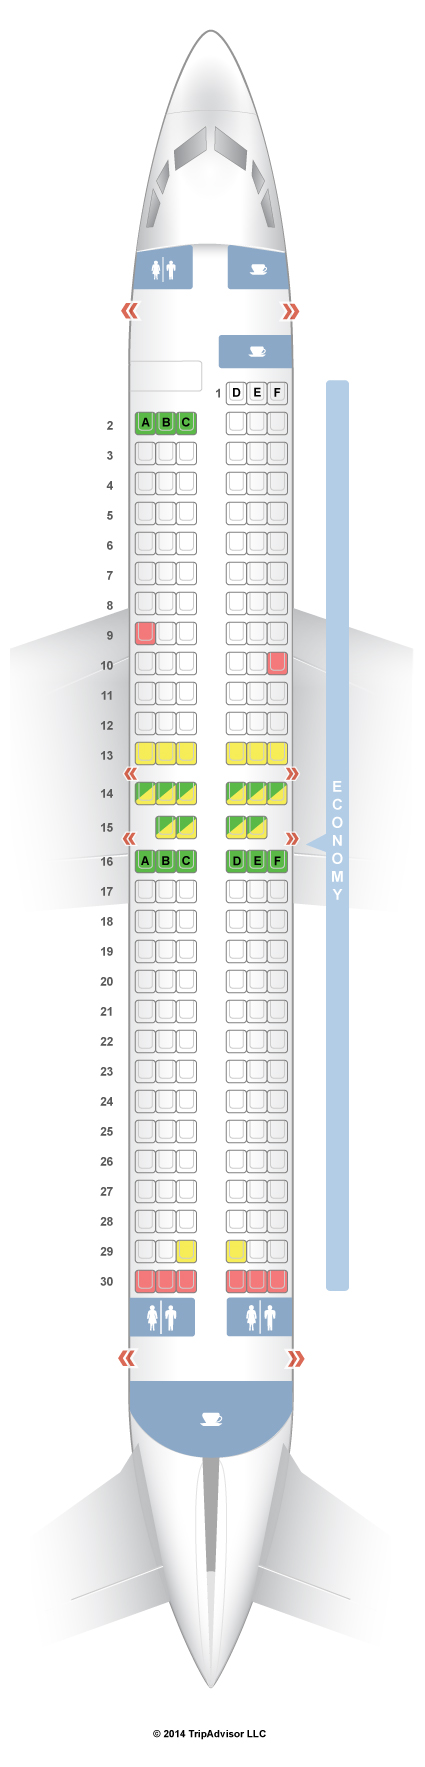 seat map boeing 737 800